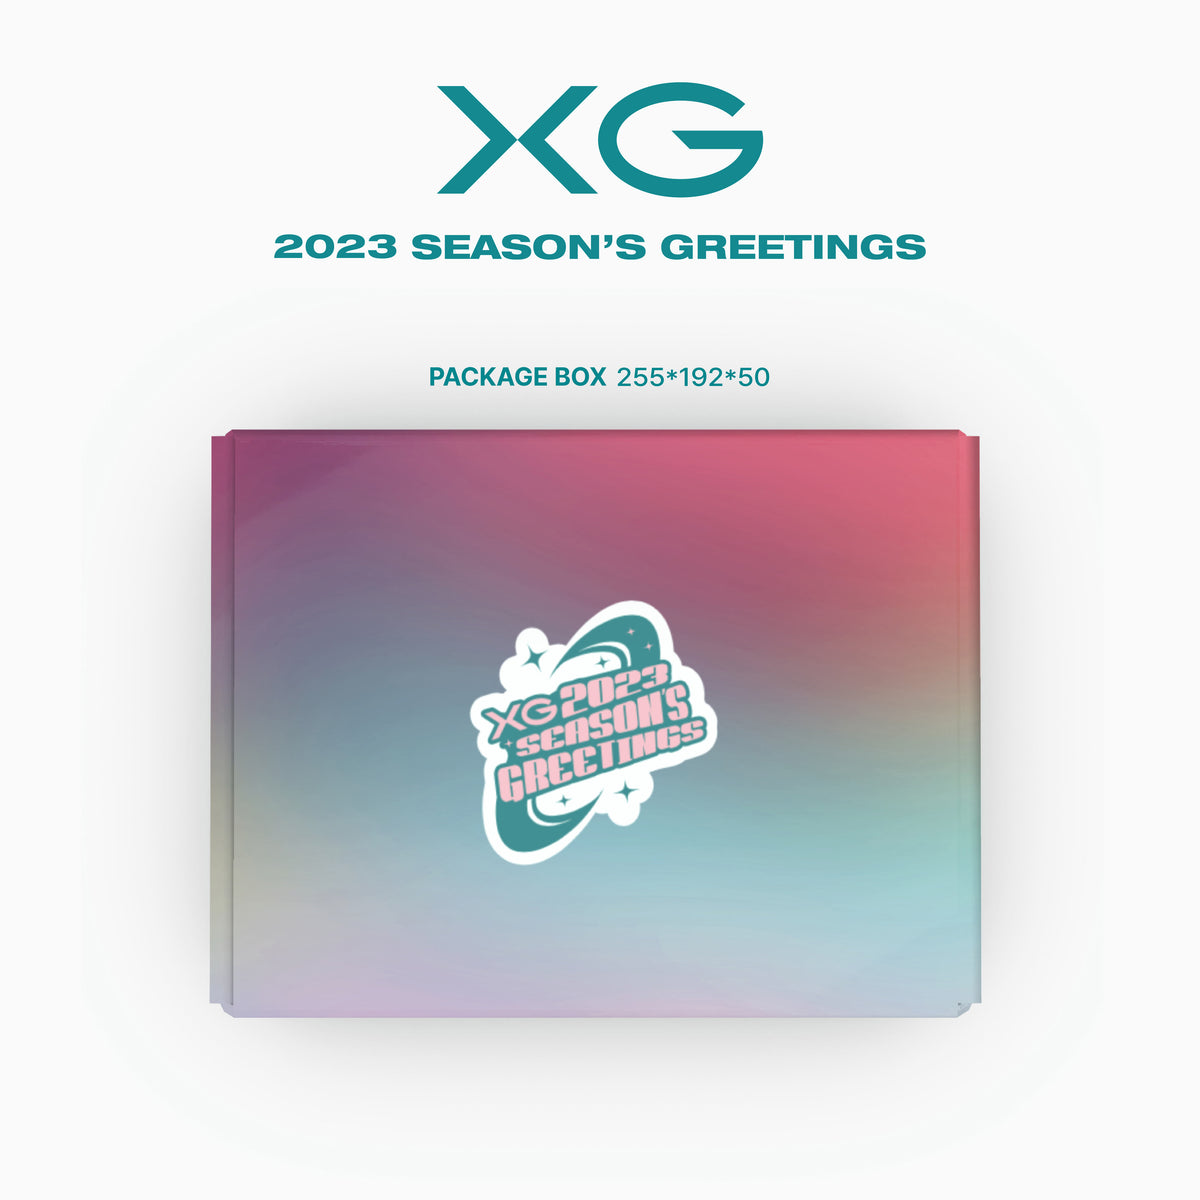 XG seasons greetings 2023